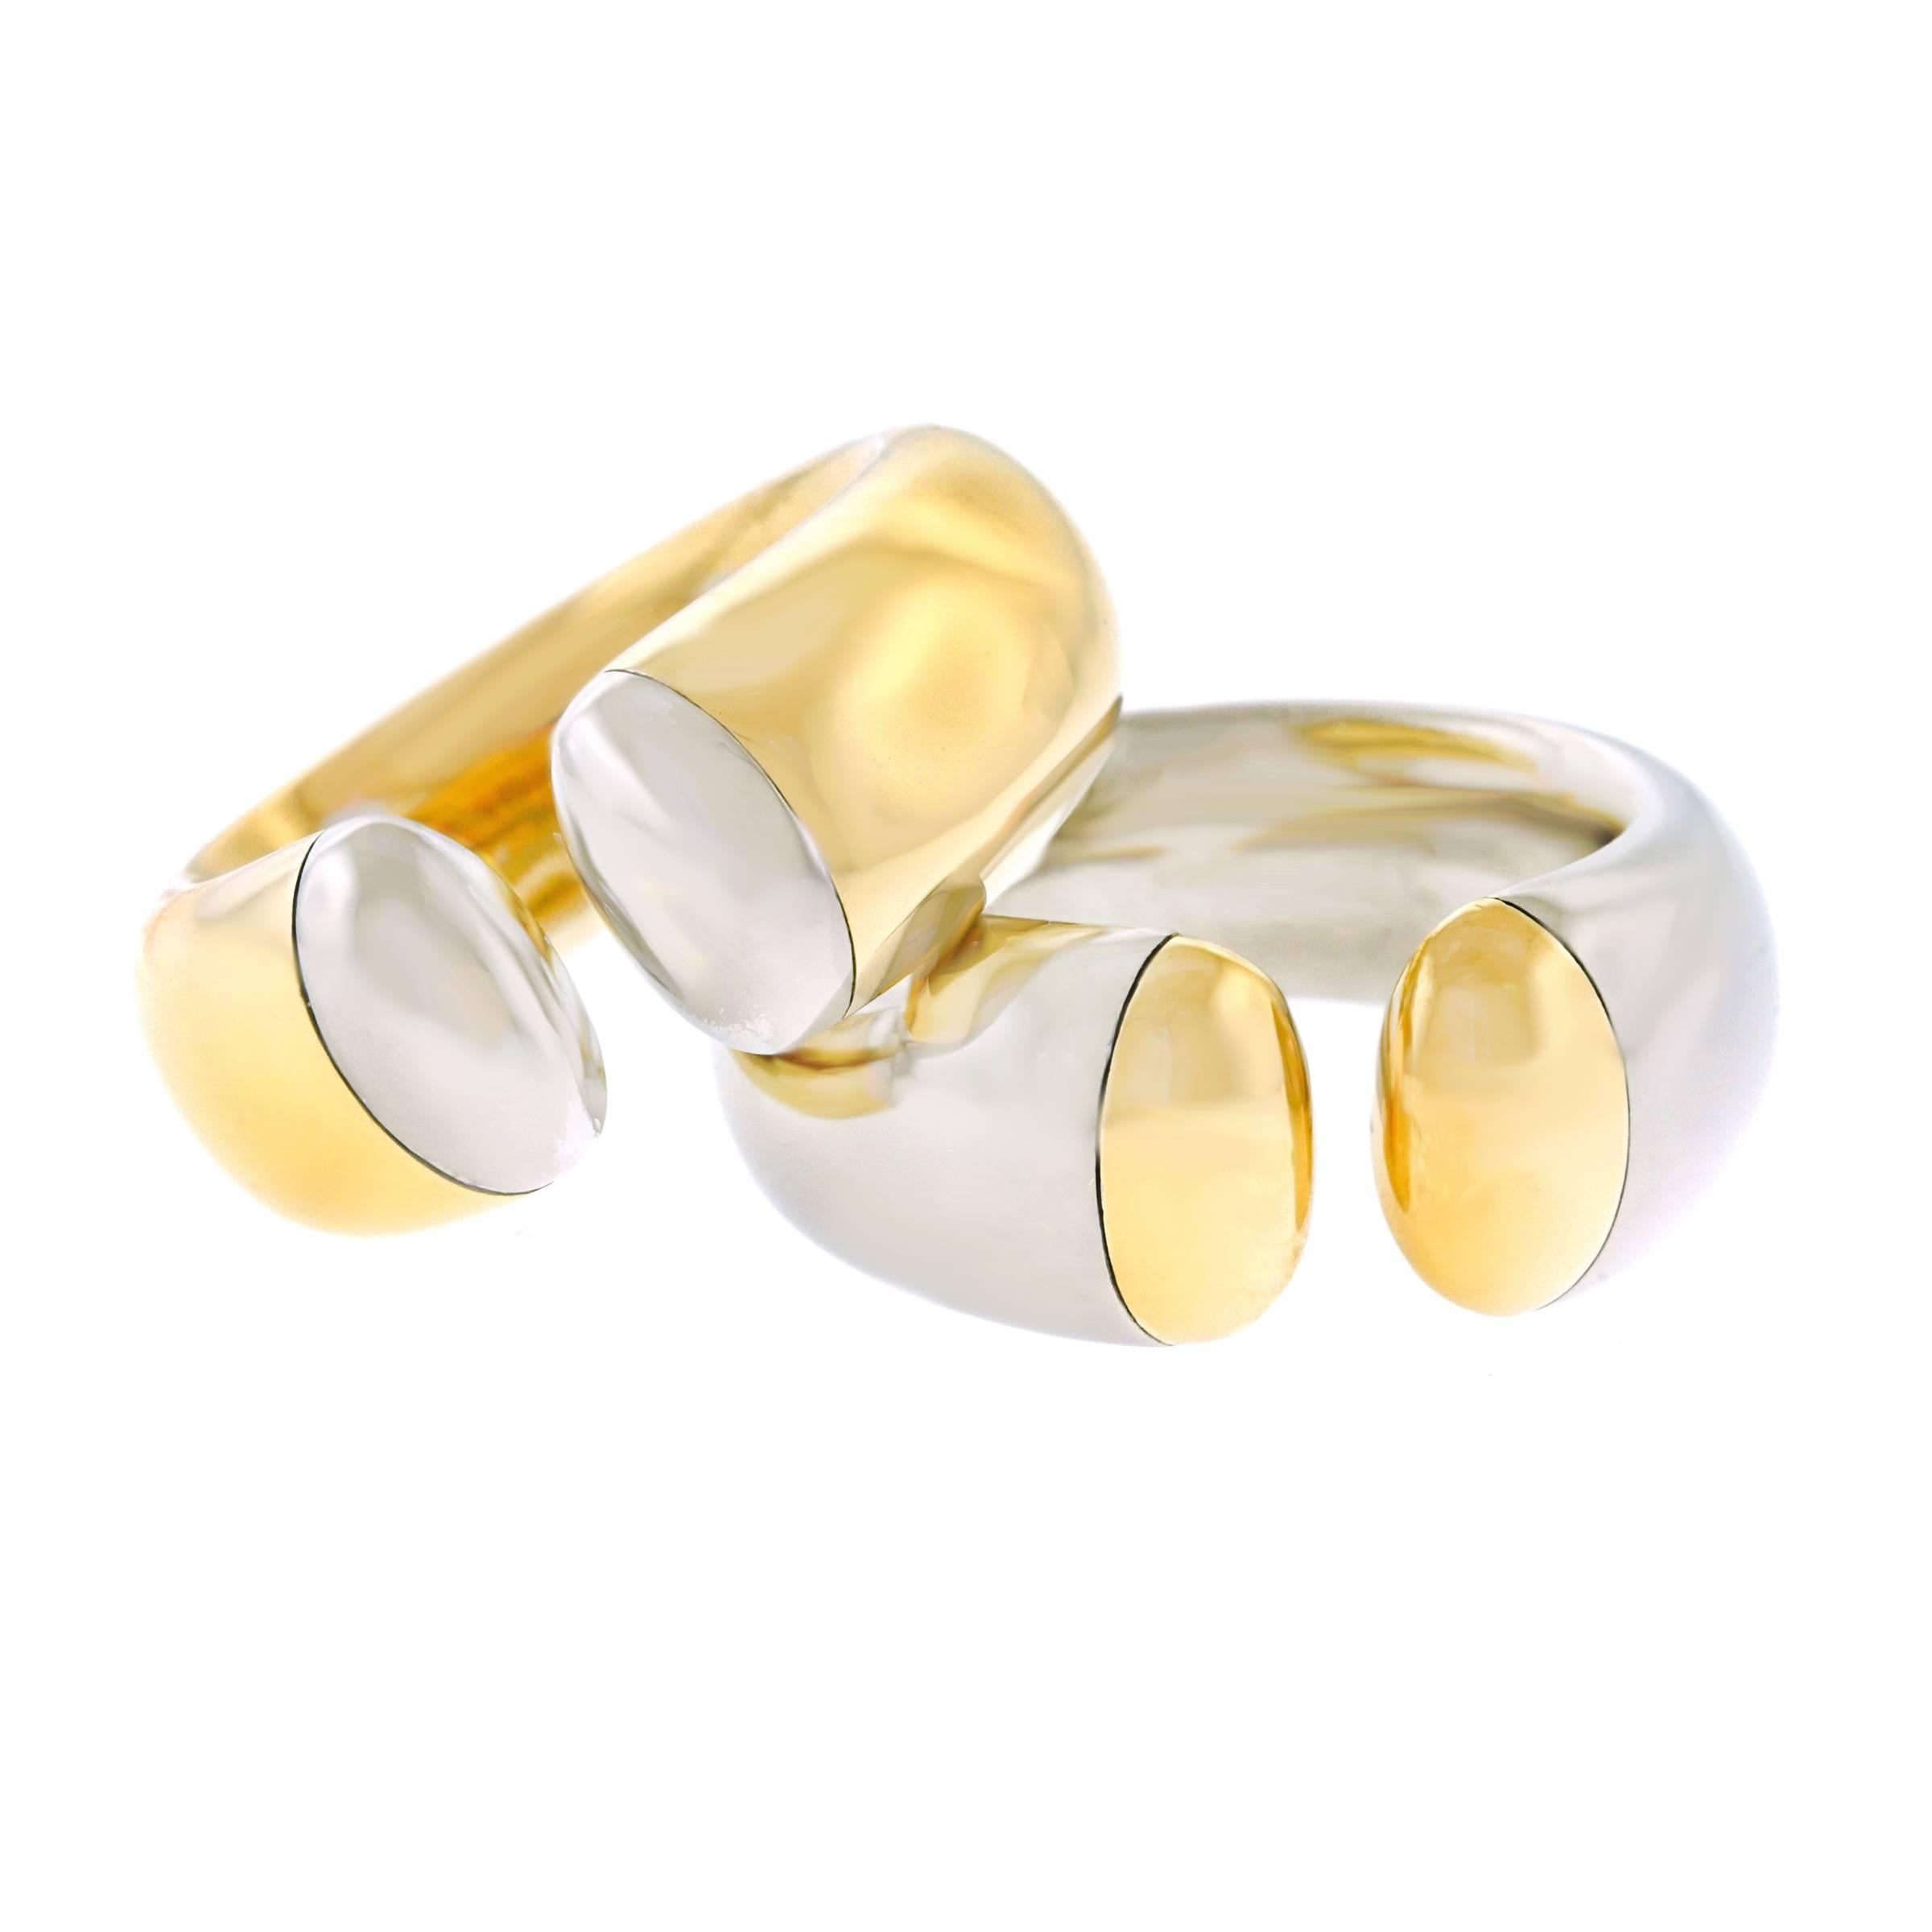 Majo Fruithof Pair of Heavy Modernist Gold Rings